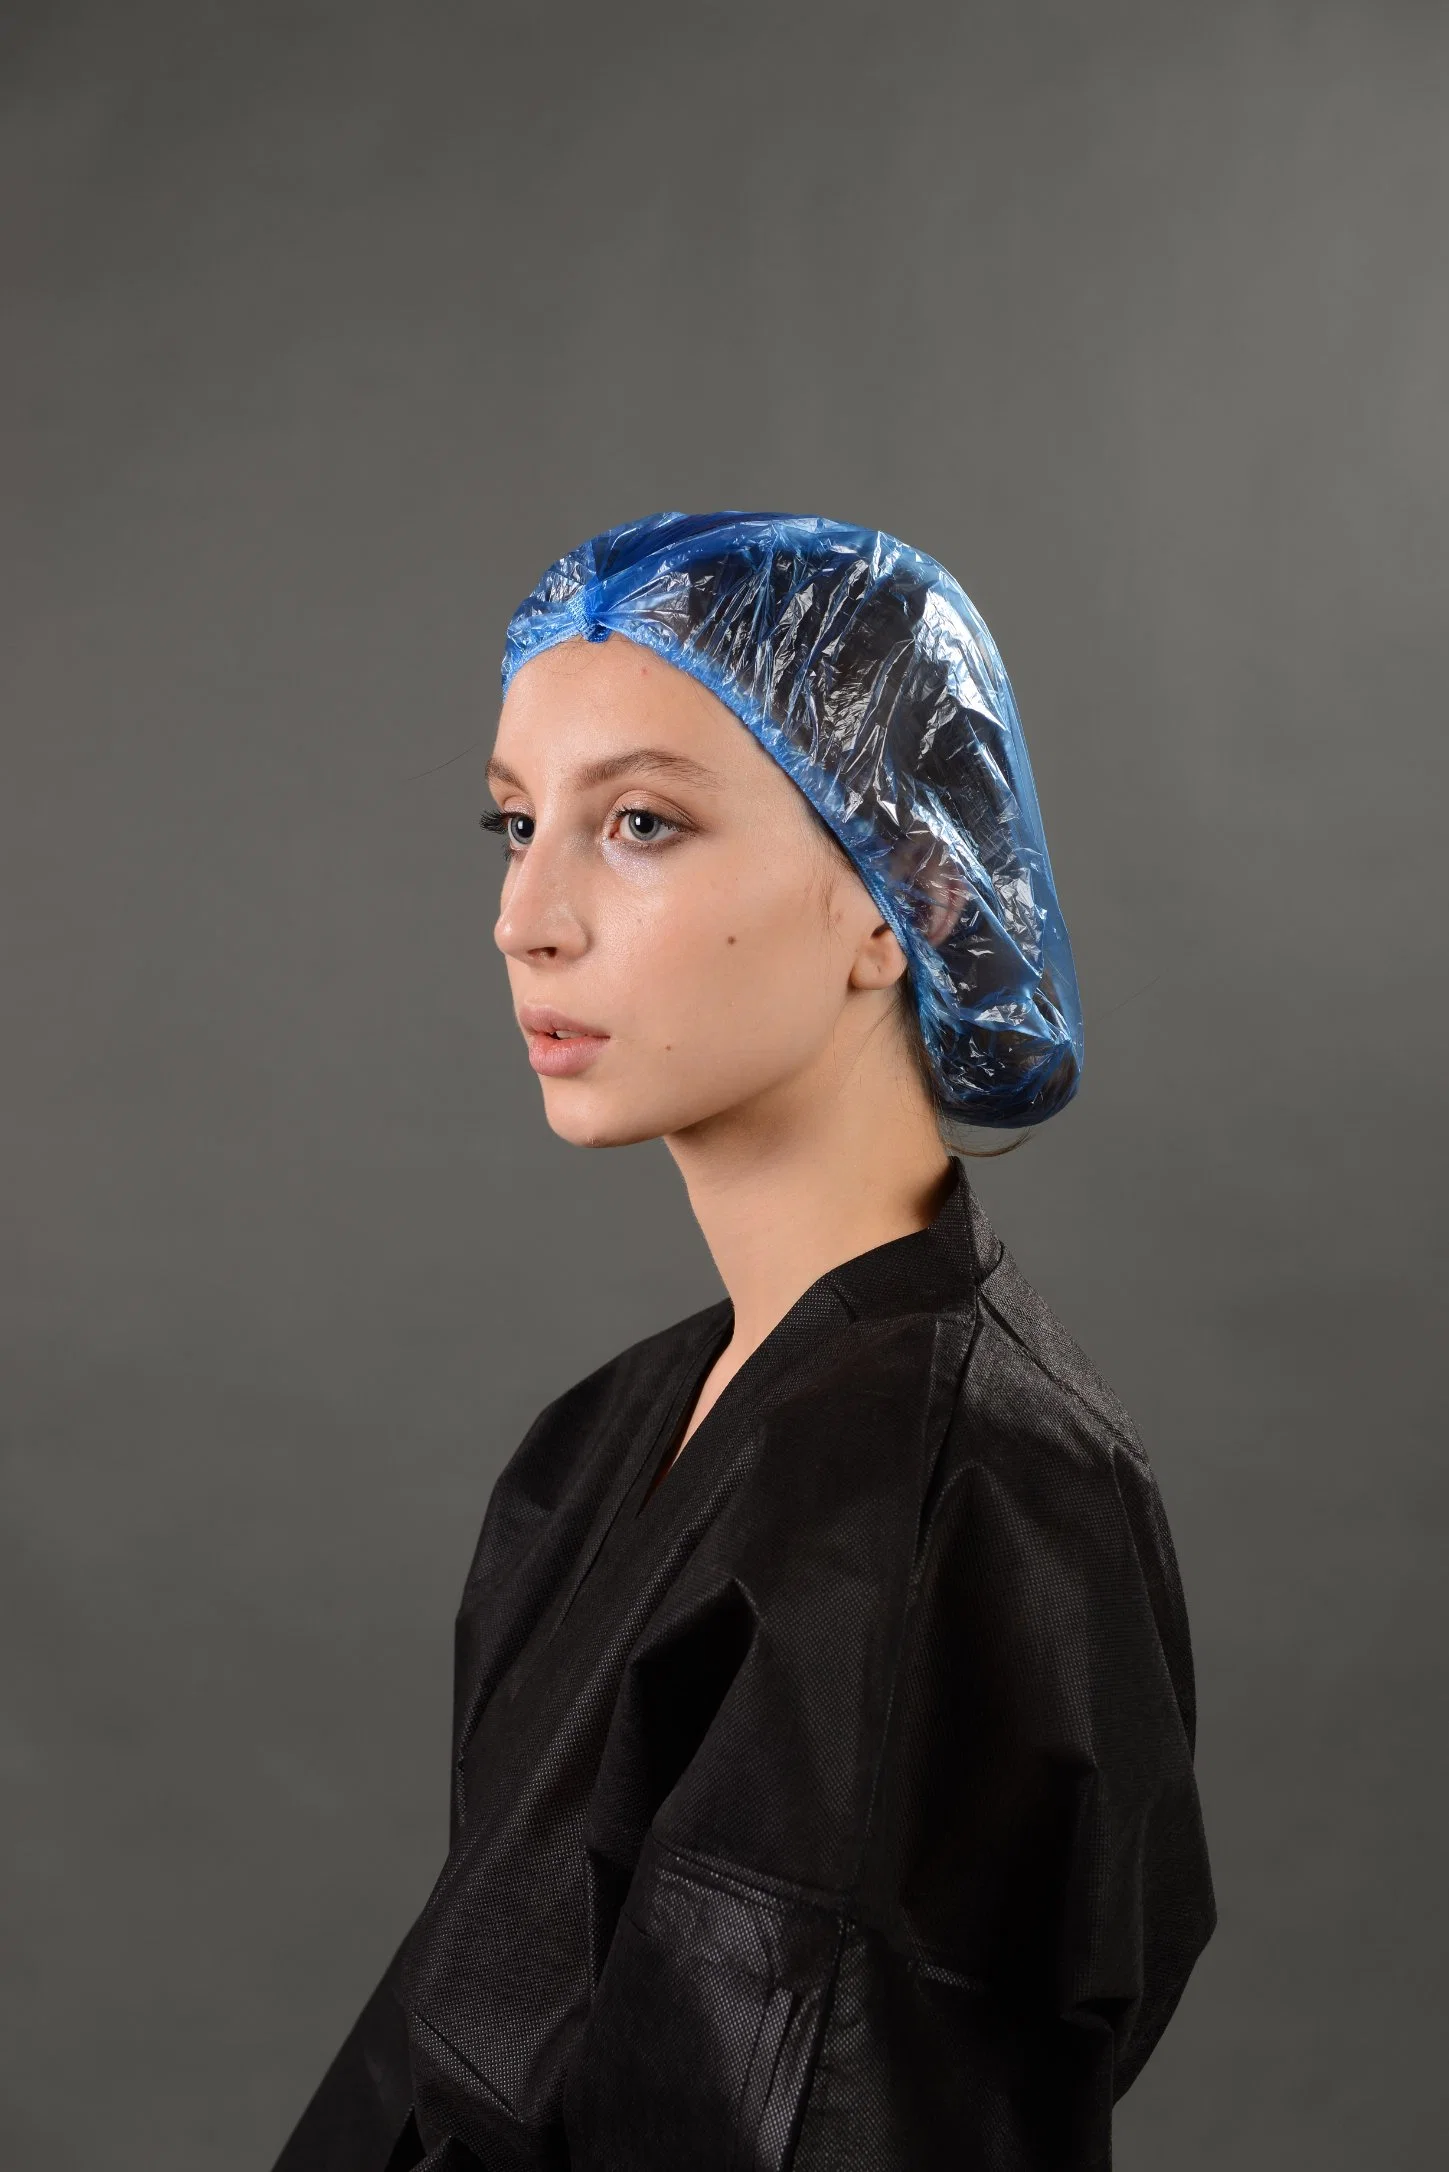 Cheap PE Head Cover, Plastic Head Cover, 21" Shower Cap